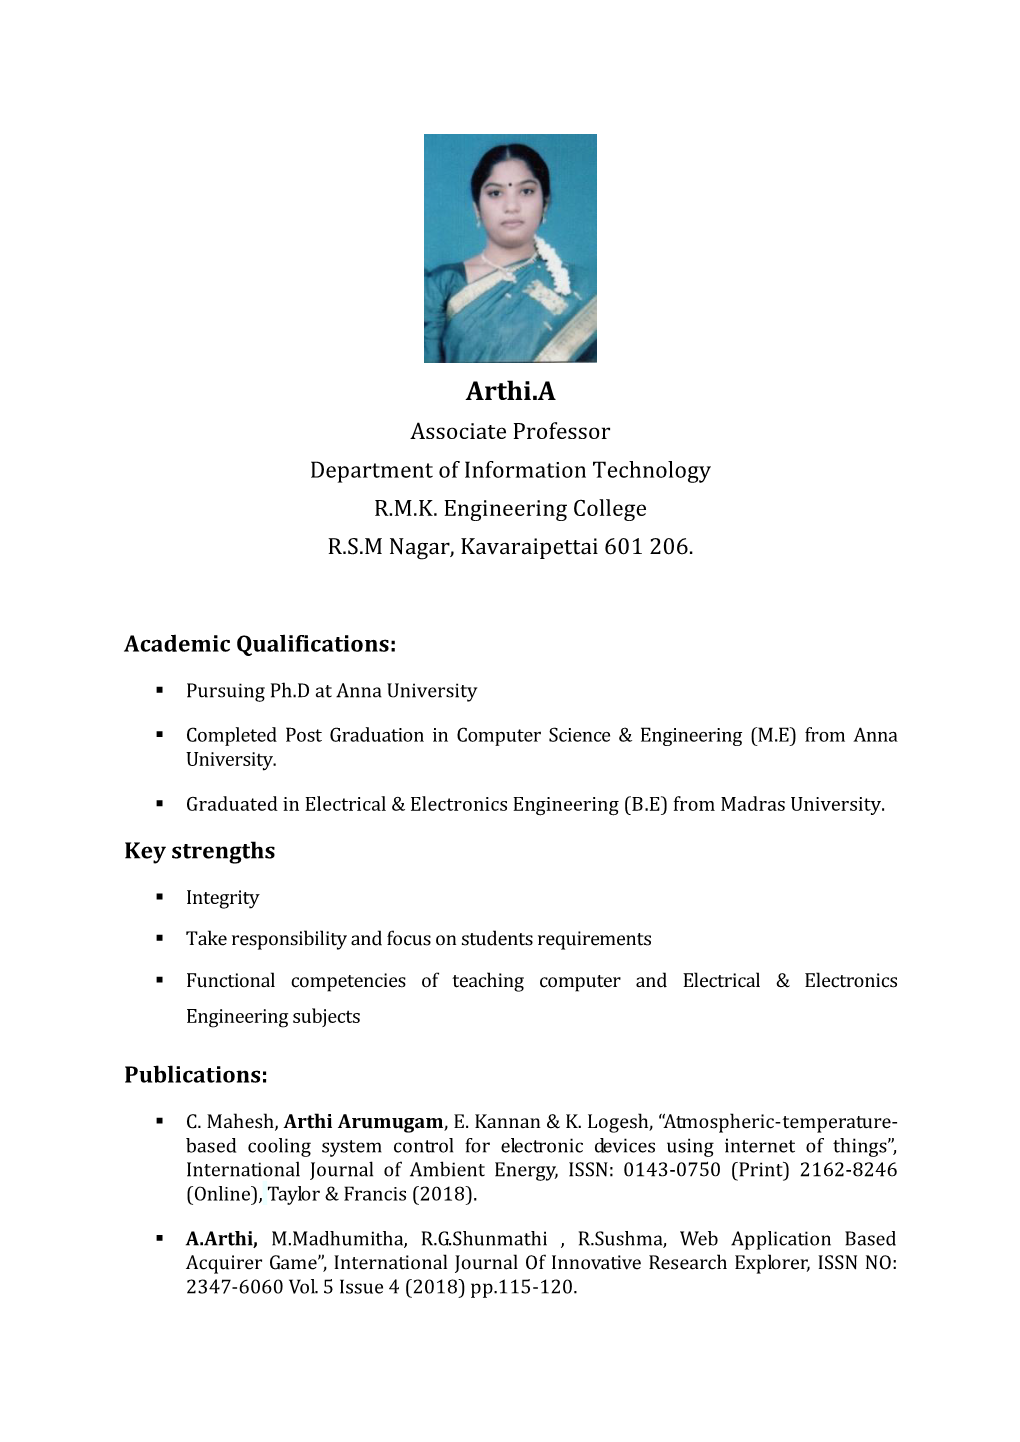 Arthi.A Associate Professor Department of Information Technology R.M.K